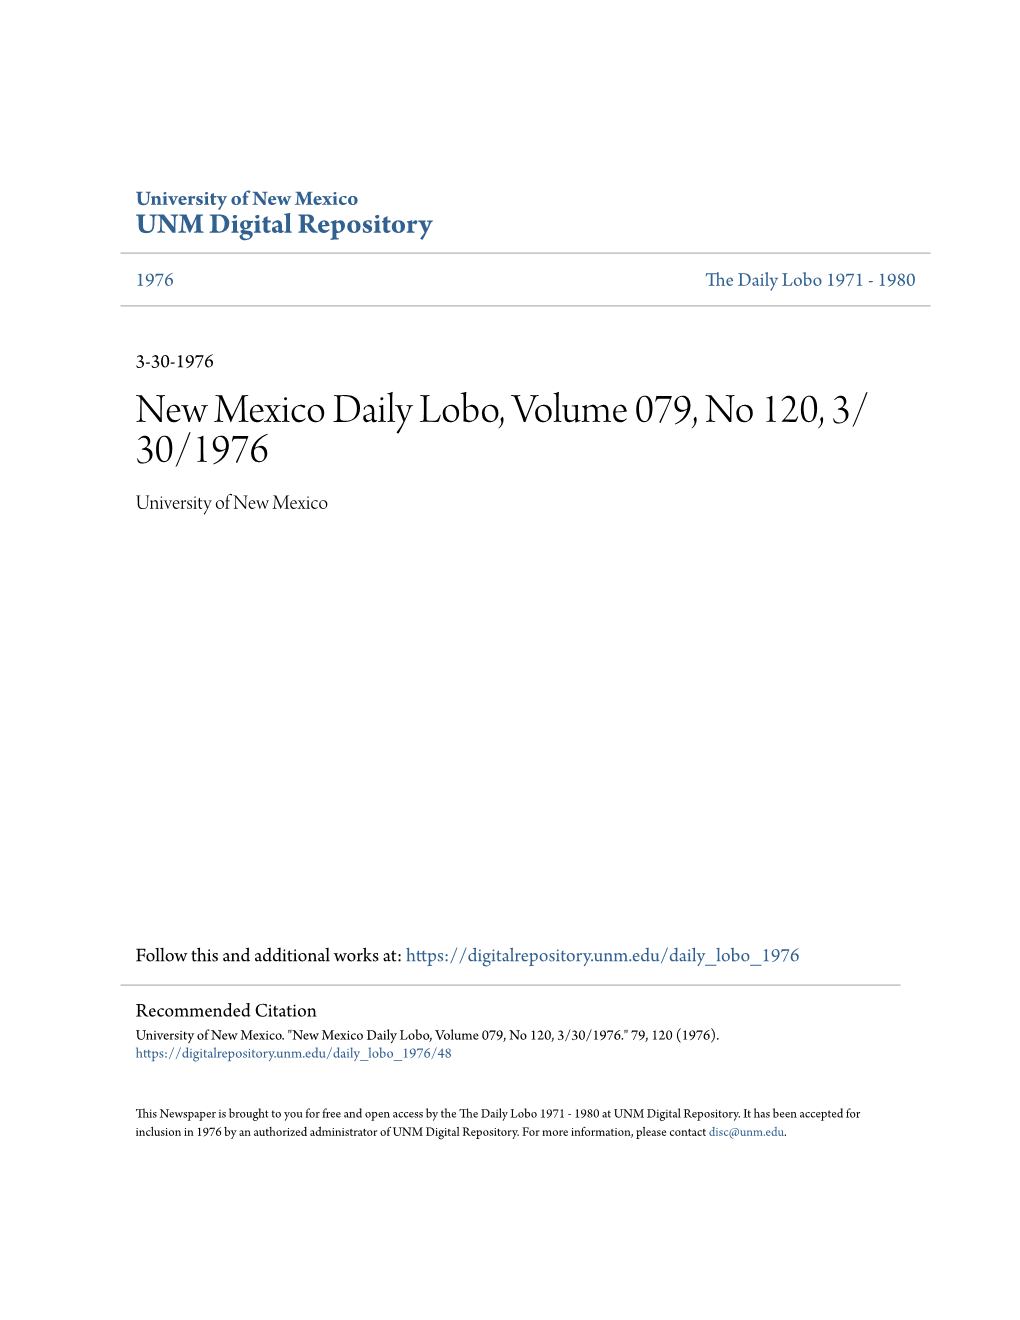 New Mexico Daily Lobo, Volume 079, No 120, 3/30/1976." 79, 120 (1976)